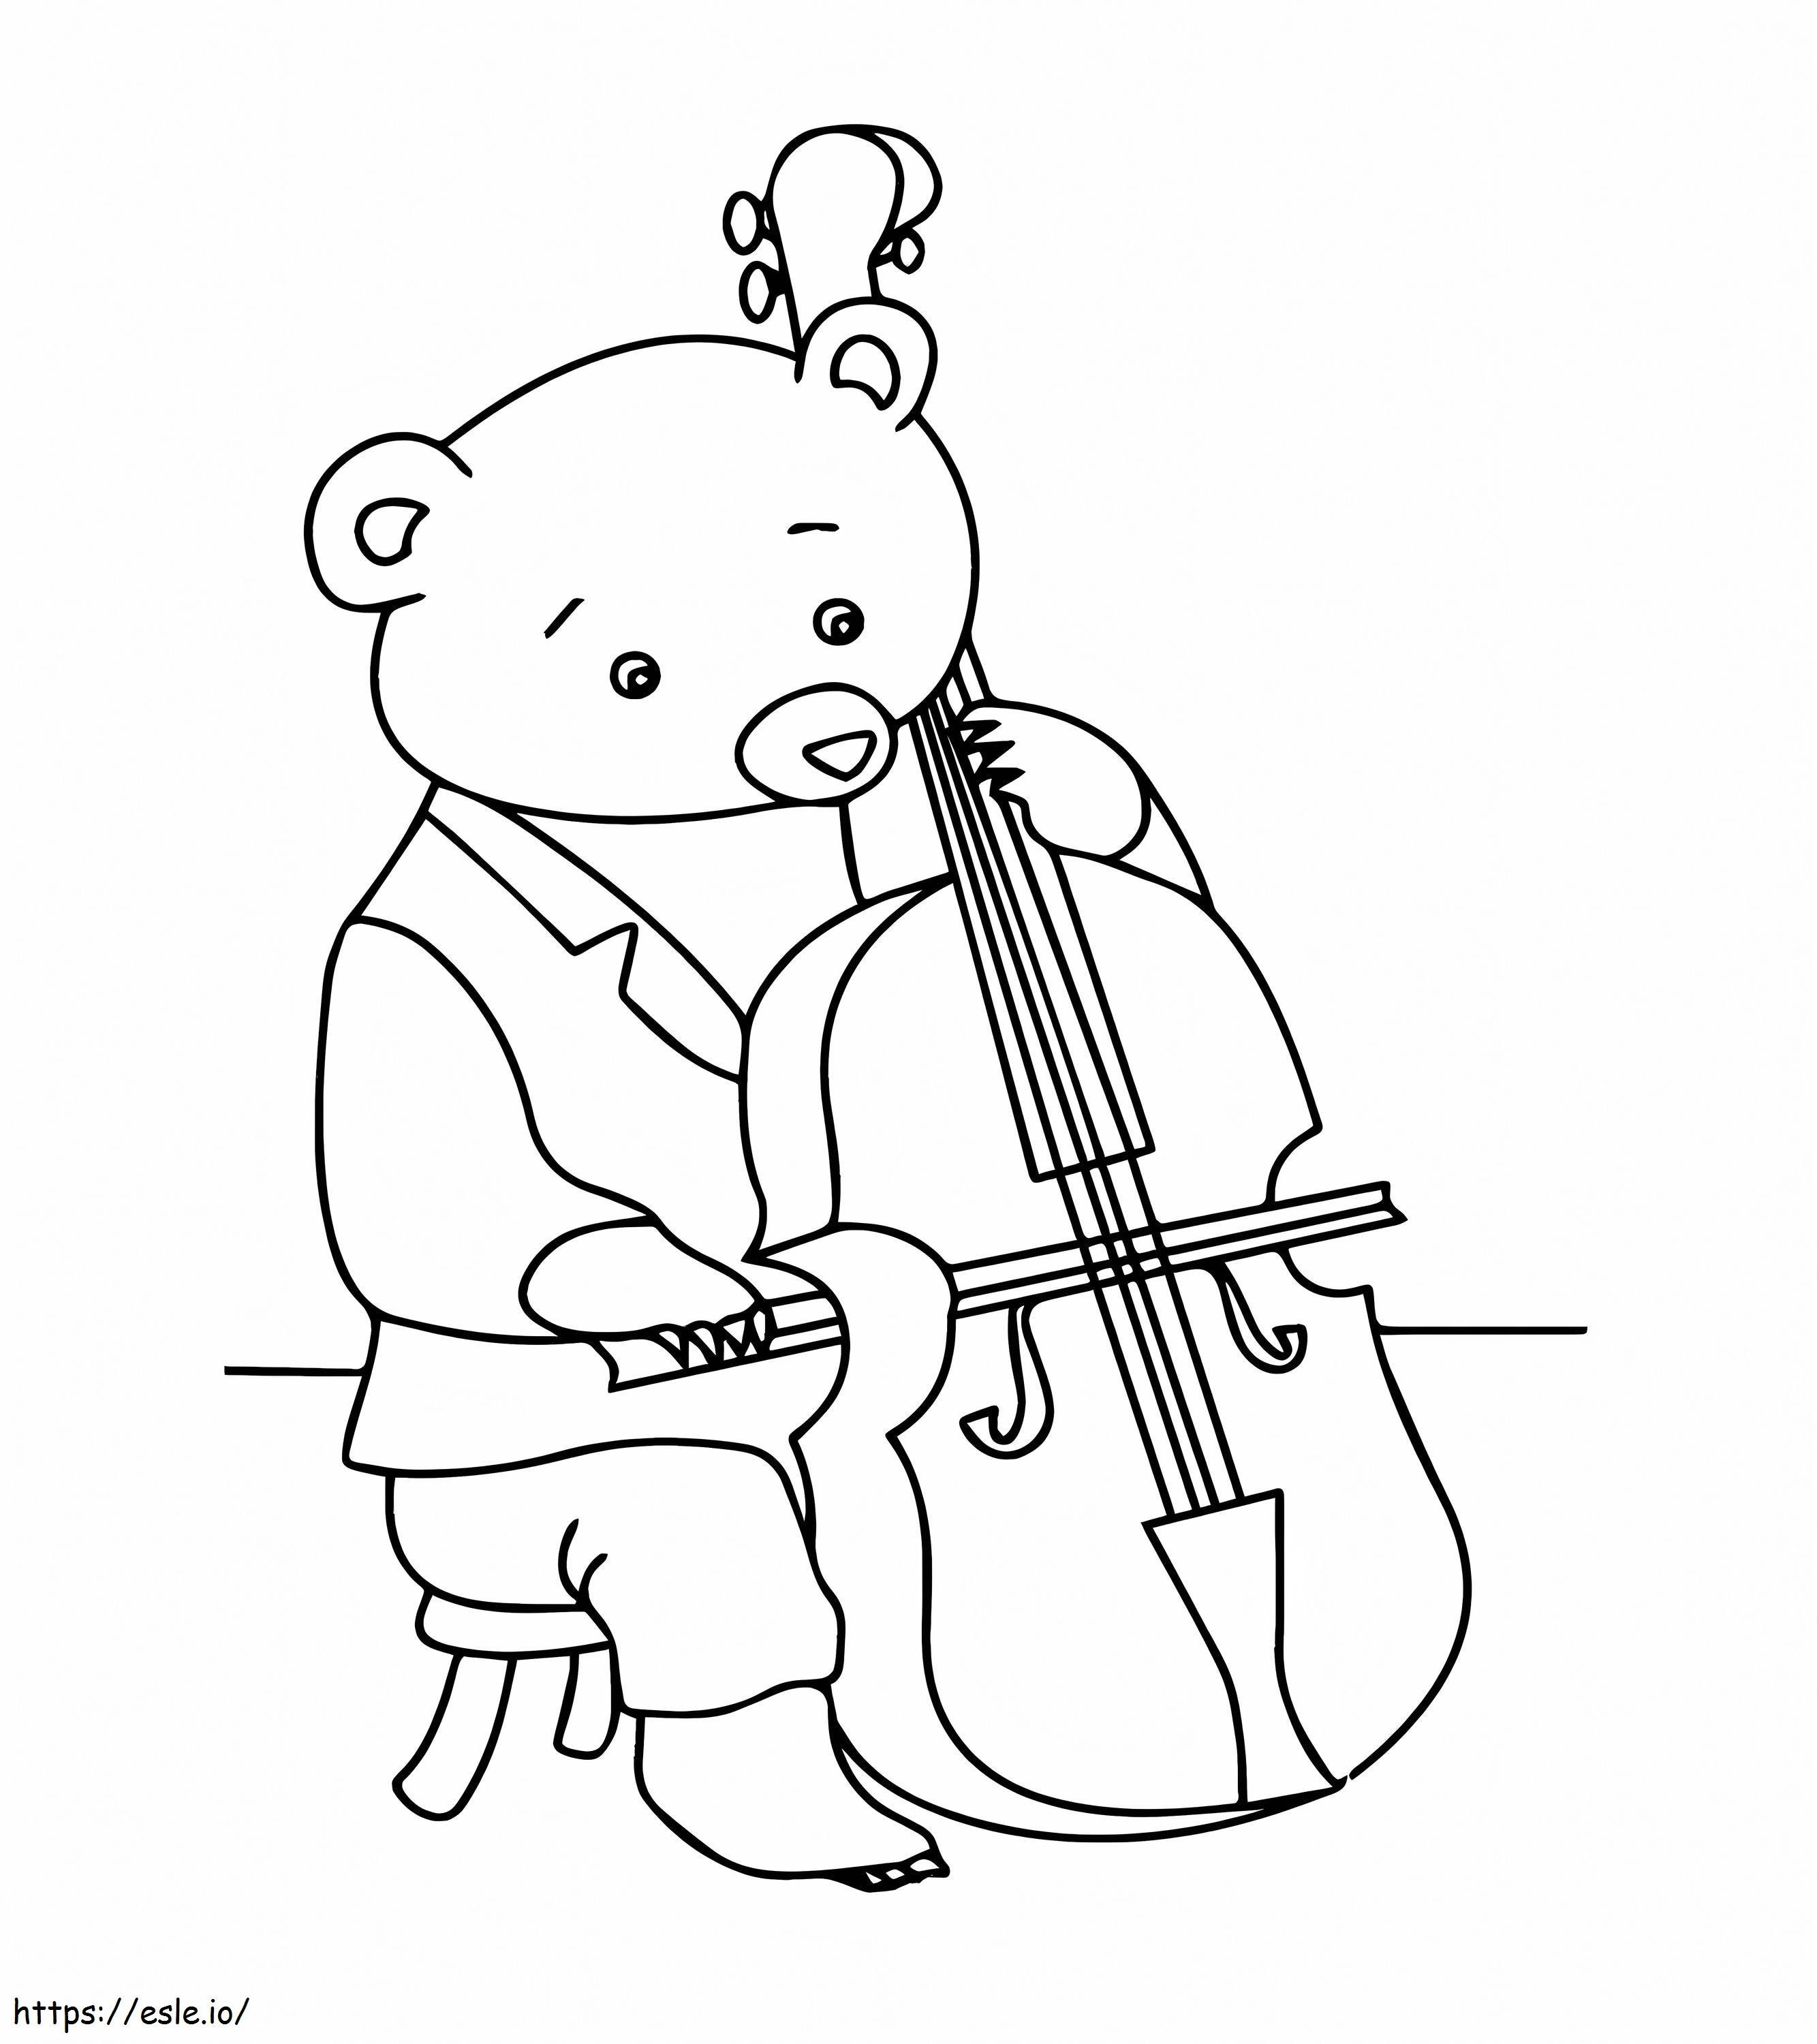 Urso tocando violino para colorir